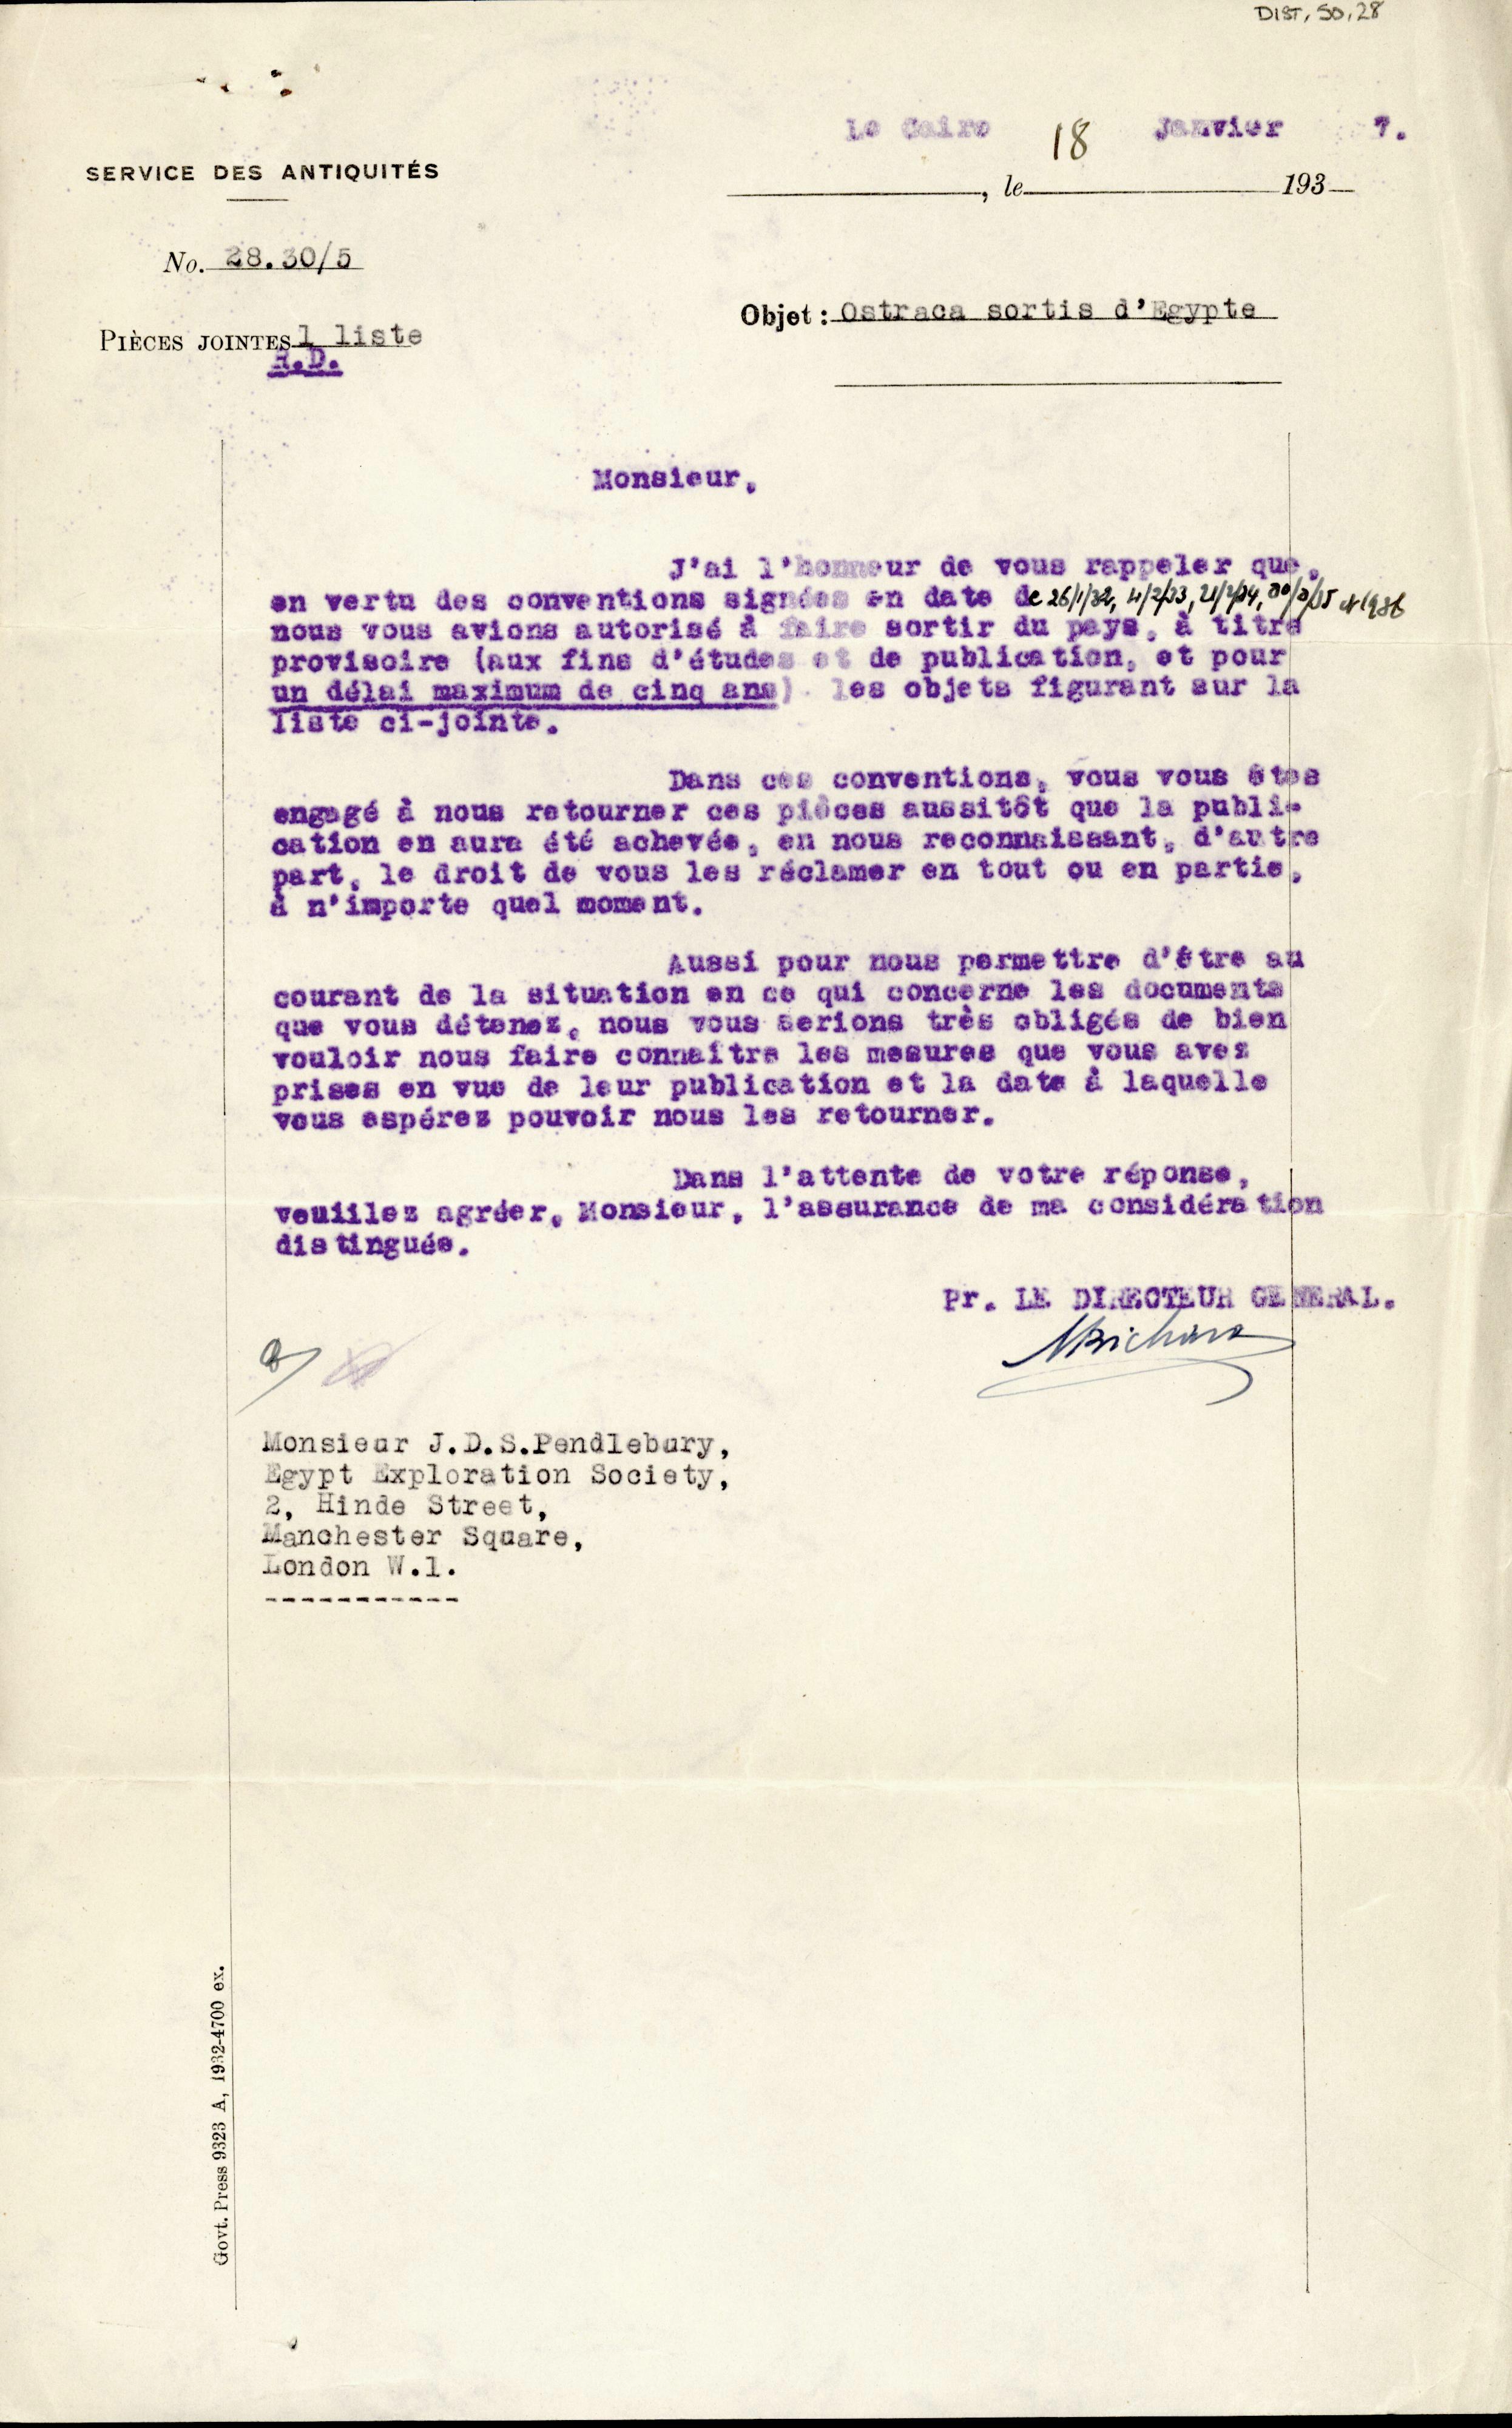 1926-39 correspondence with Antiquities Service DIST.50.28